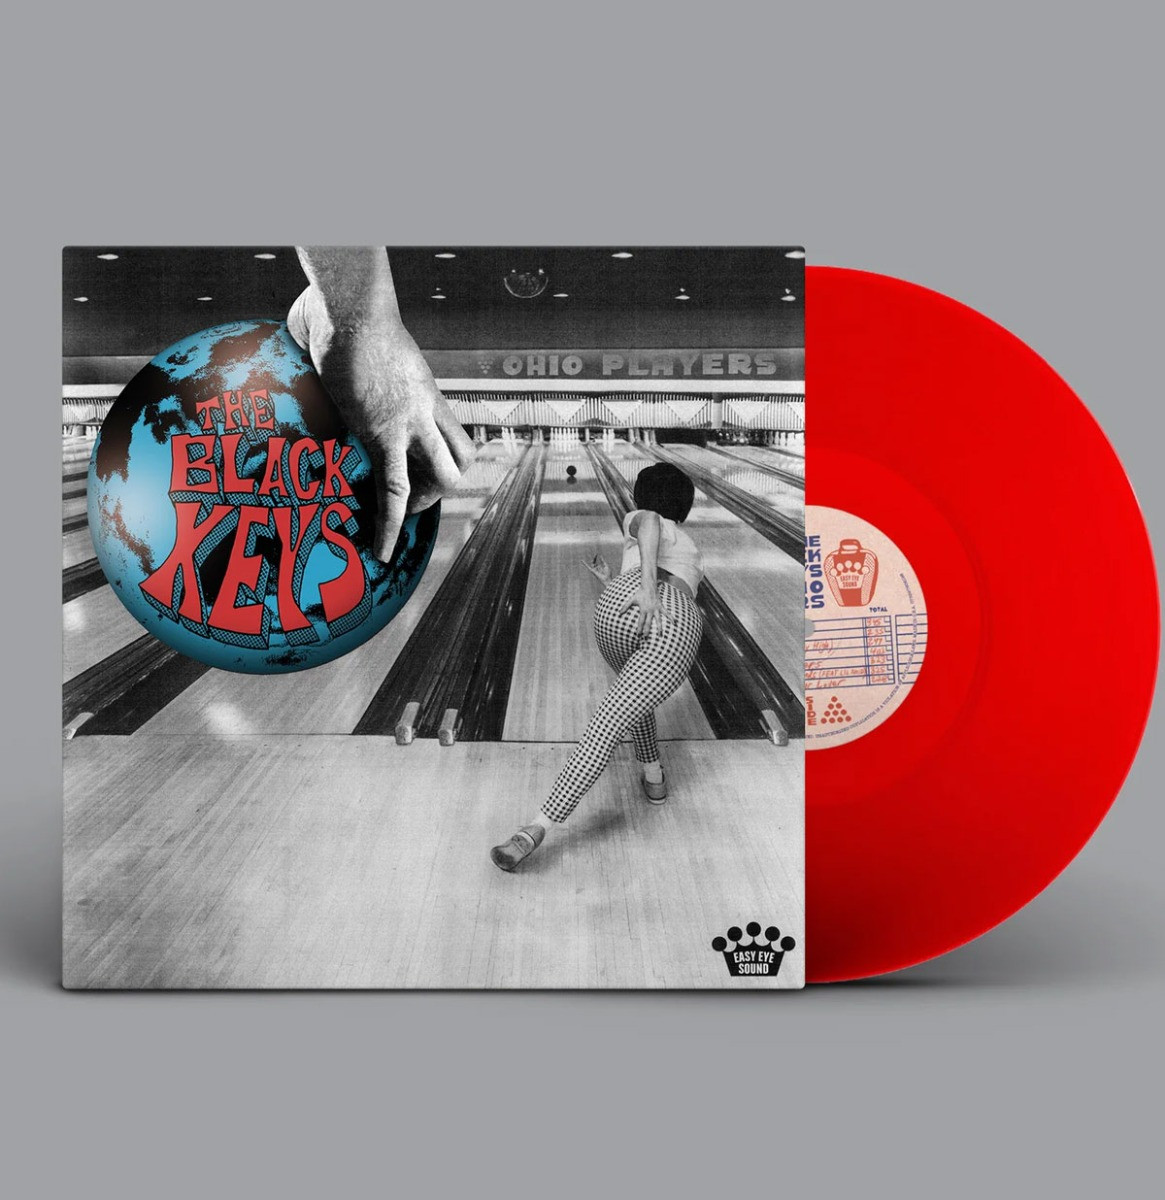 The Black Keys - Ohio Players / Red Coloured Vinyl LP